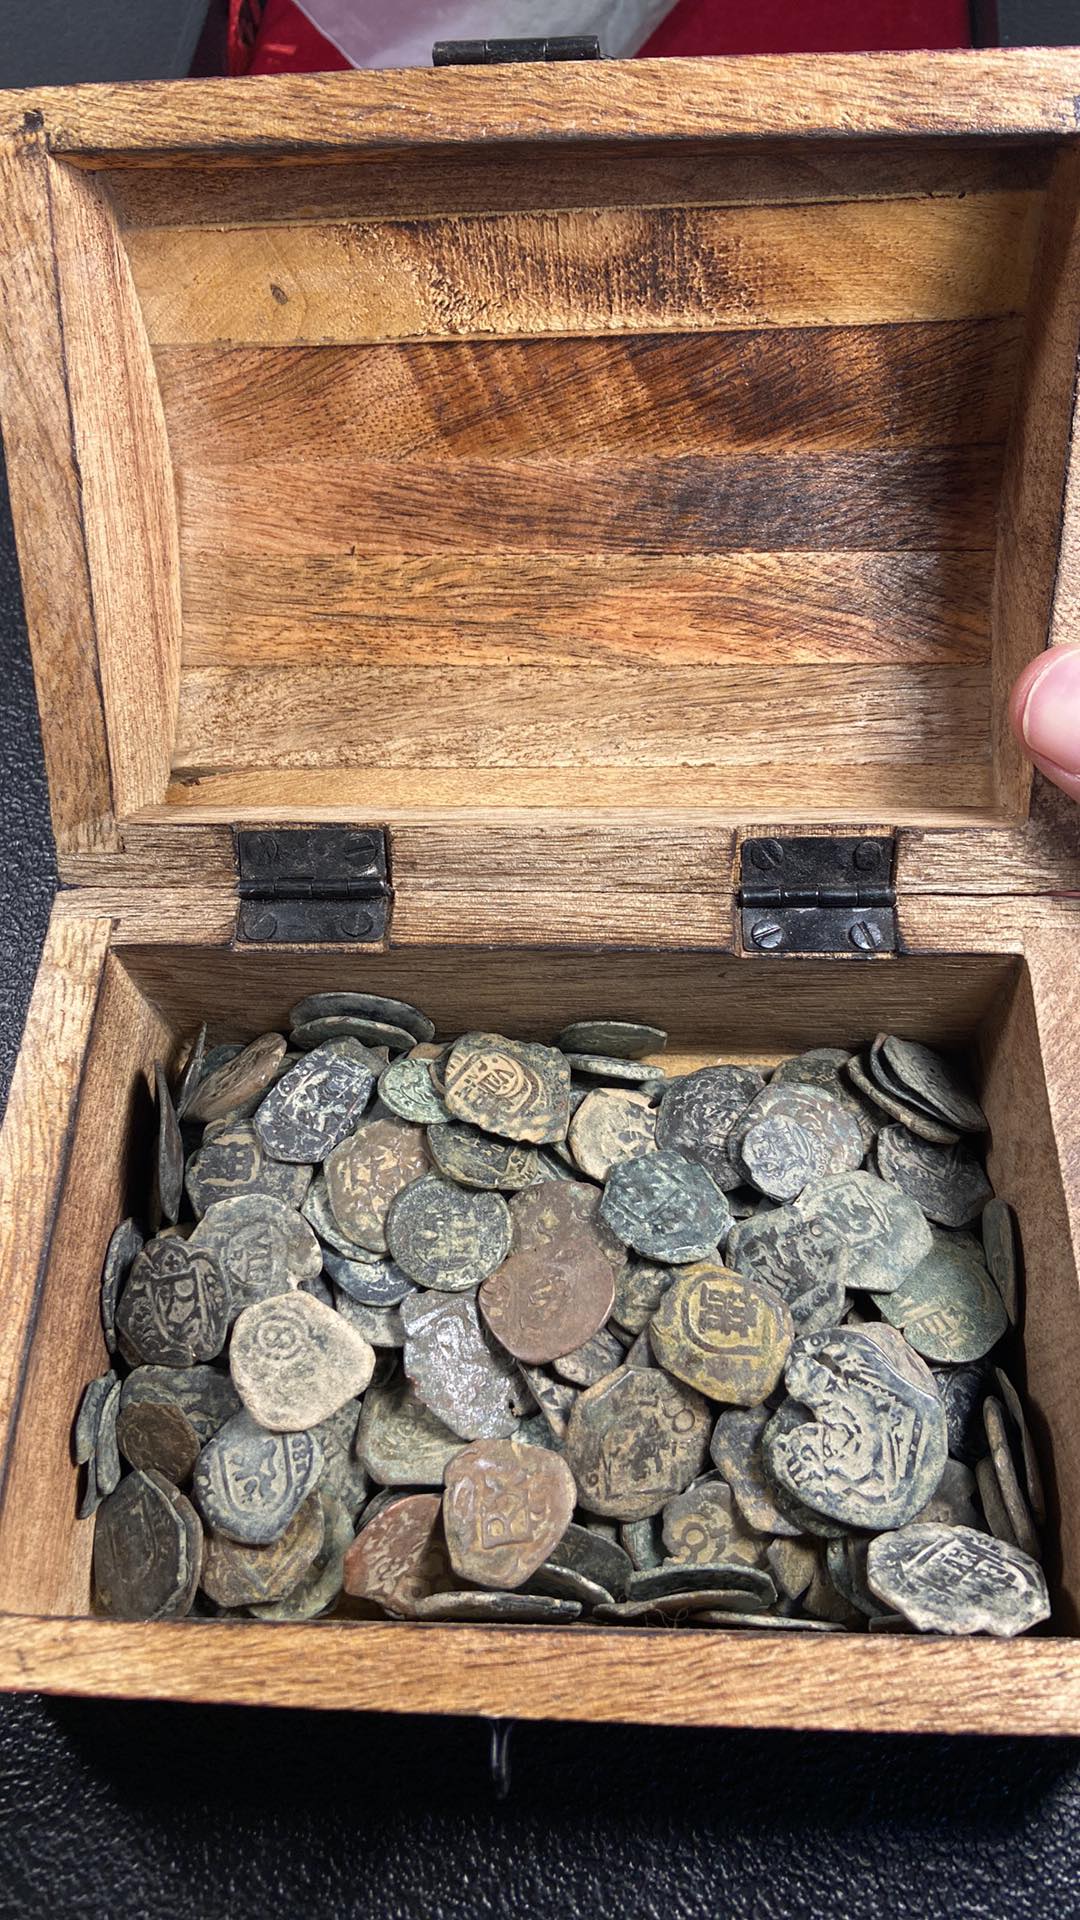 Pirate Coin - Spanish Copper Maravedis